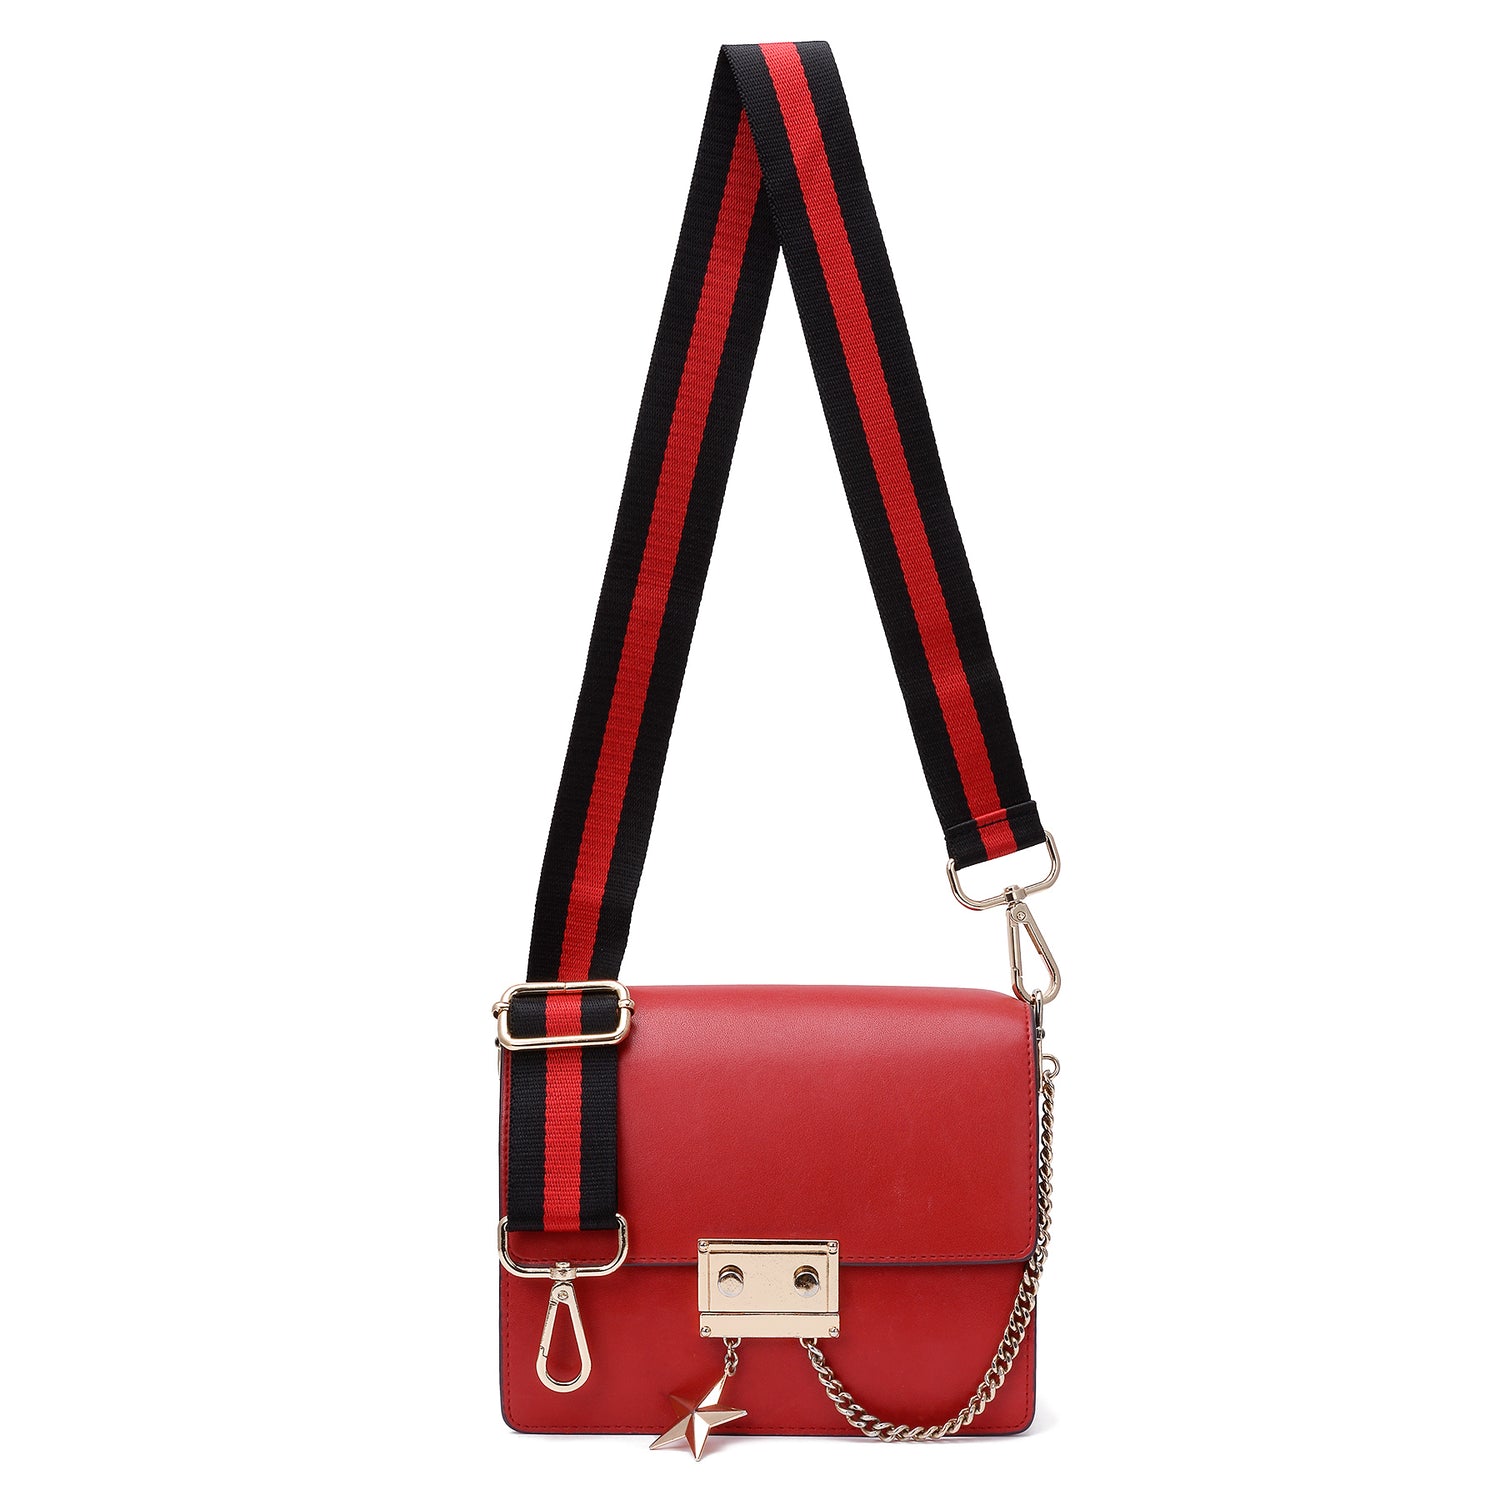 EEEKit Adjustable Wide Shoulder Bag Straps, 3 Pack Handbag Straps for  Crossbody Bag Replacement Belt with Colorful Bohemian Style Pattern, Canvas  Bag